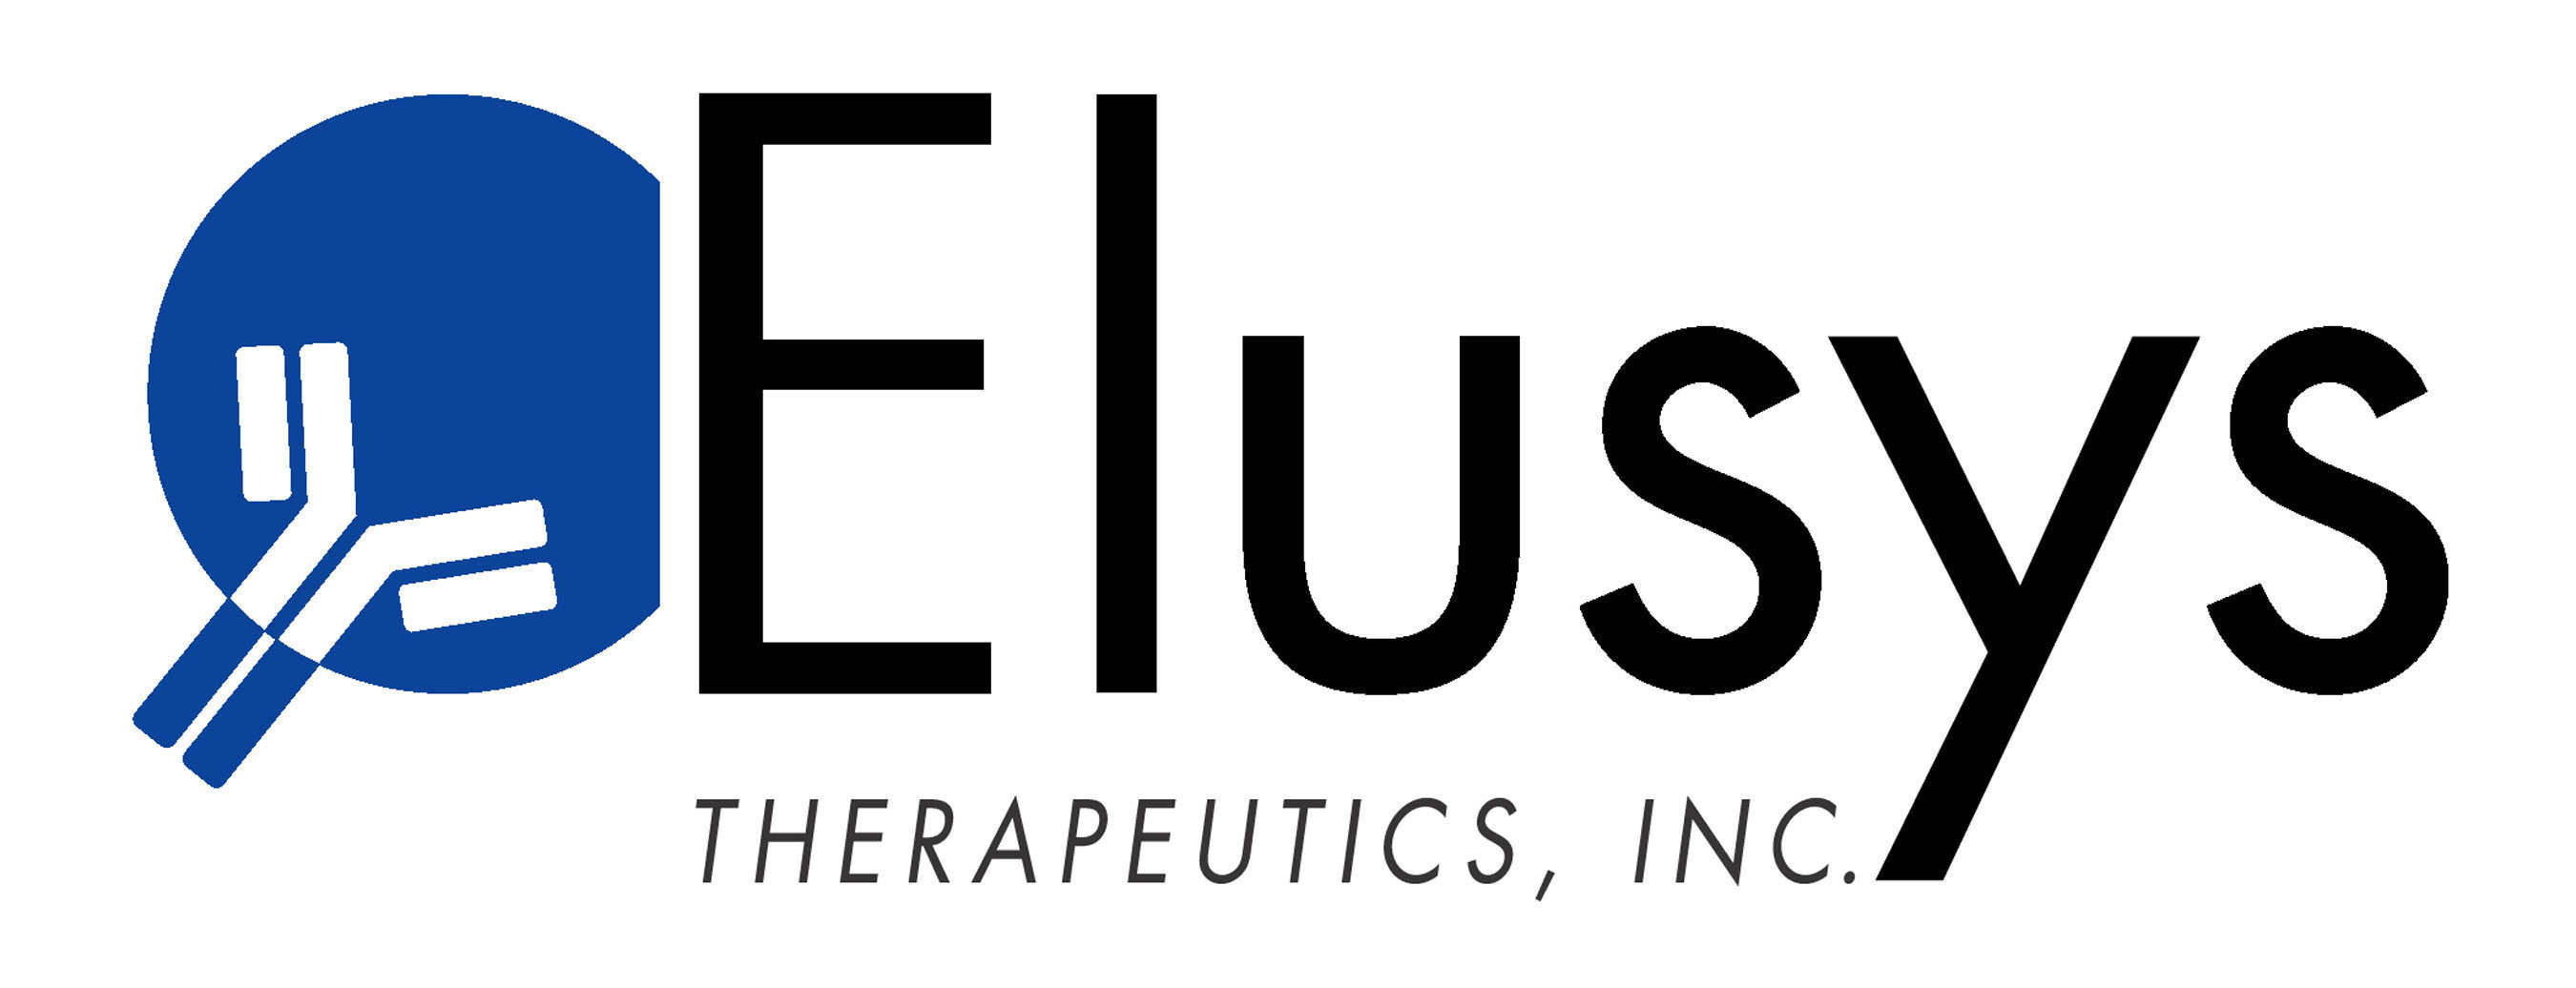 corporate logo. (PRNewsFoto/Elusys Therapeutics, Inc.) (PRNewsFoto/)